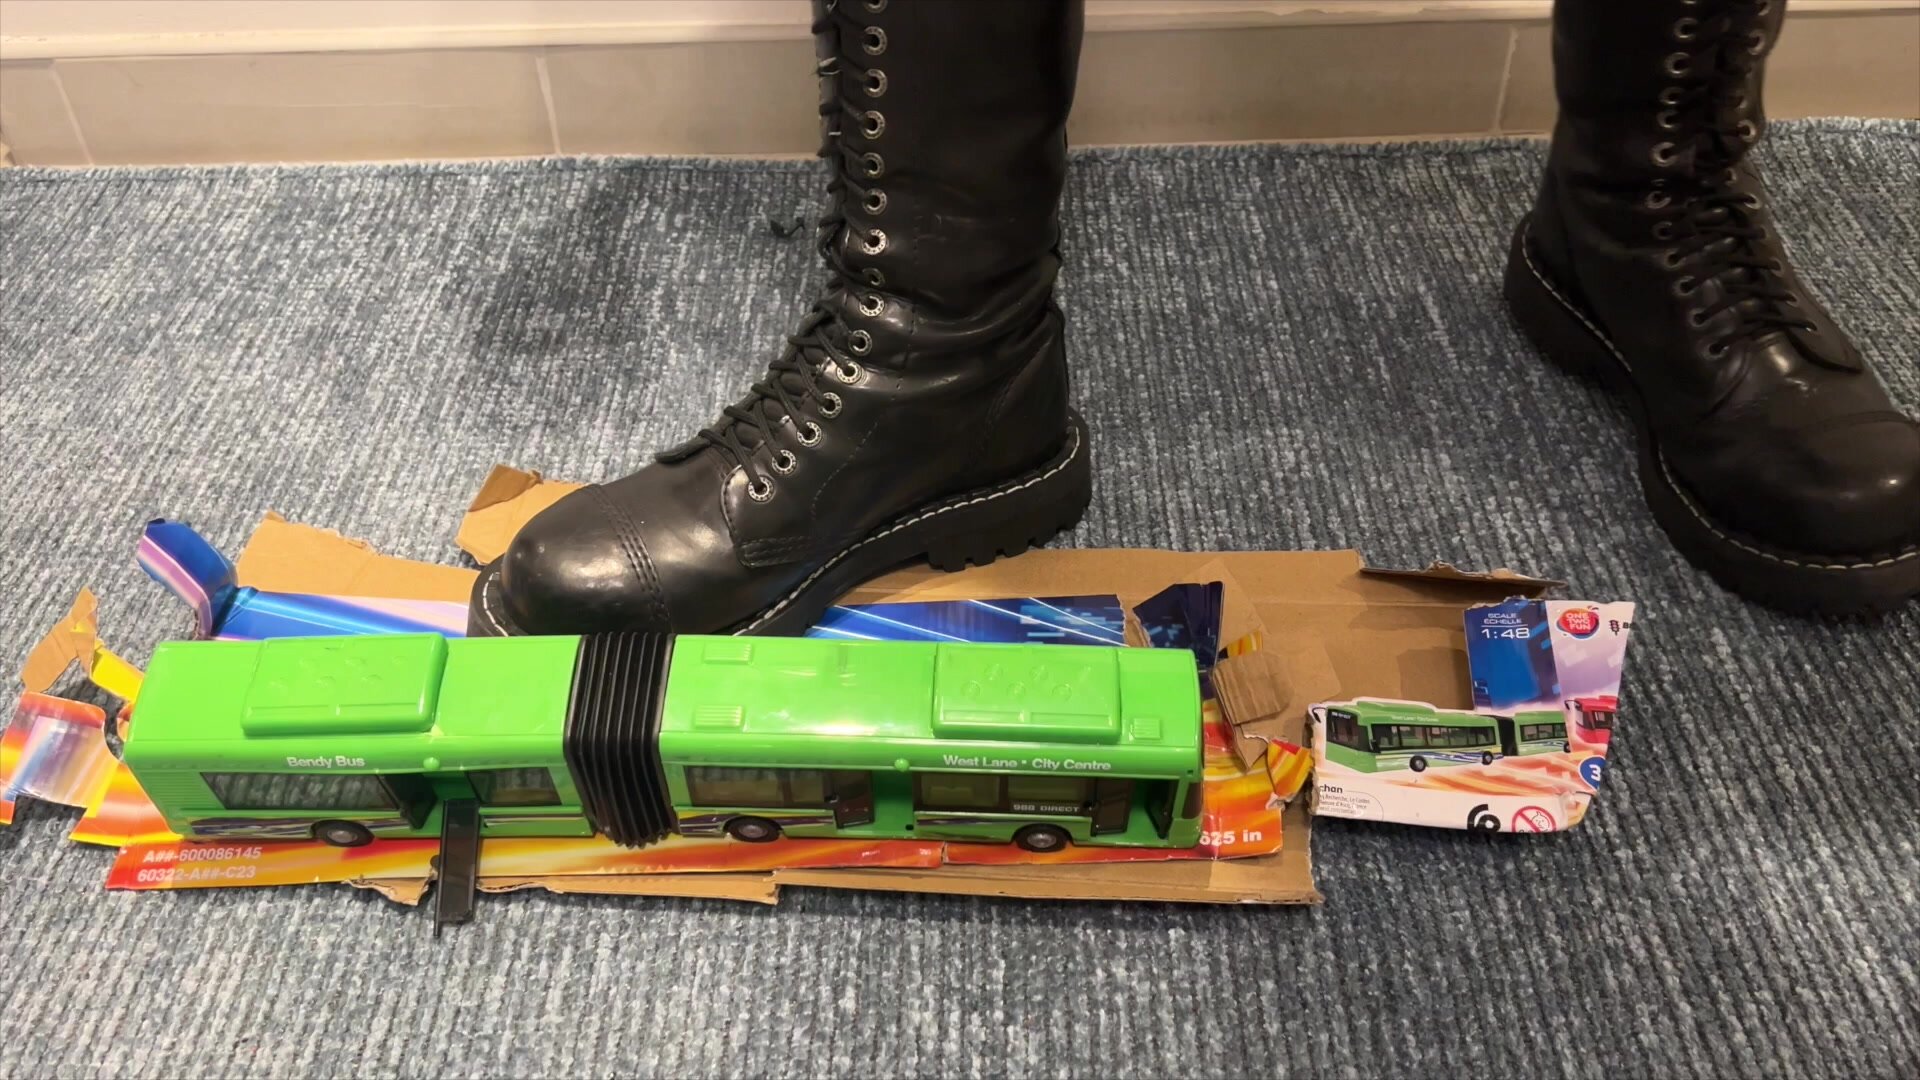 Steel Ranger boost crush toy bus